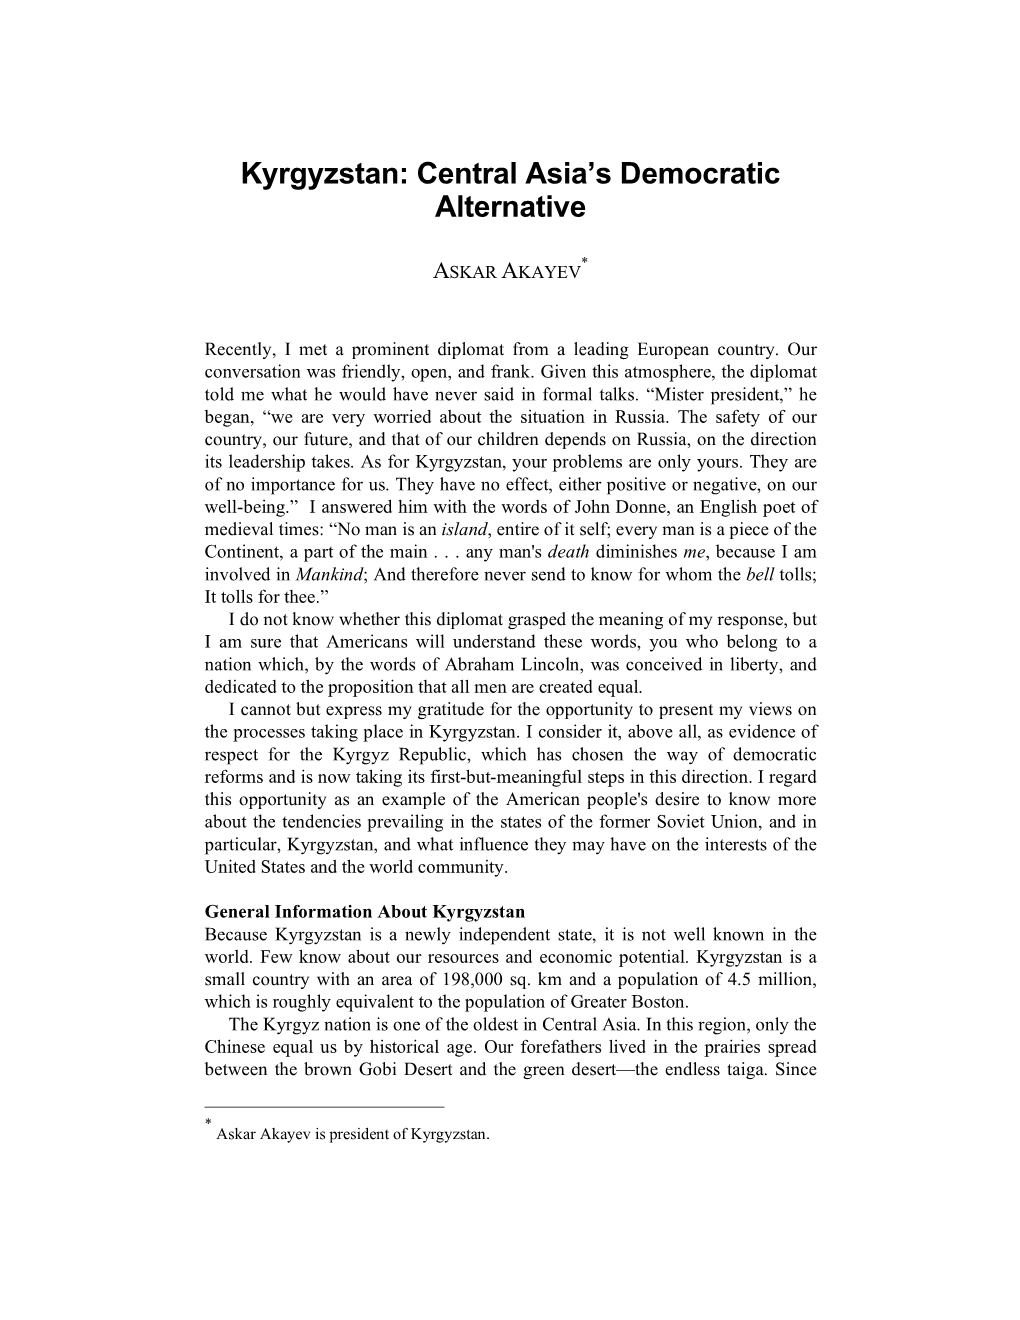 Kyrgyzstan: Central Asia's Democratic Alternative